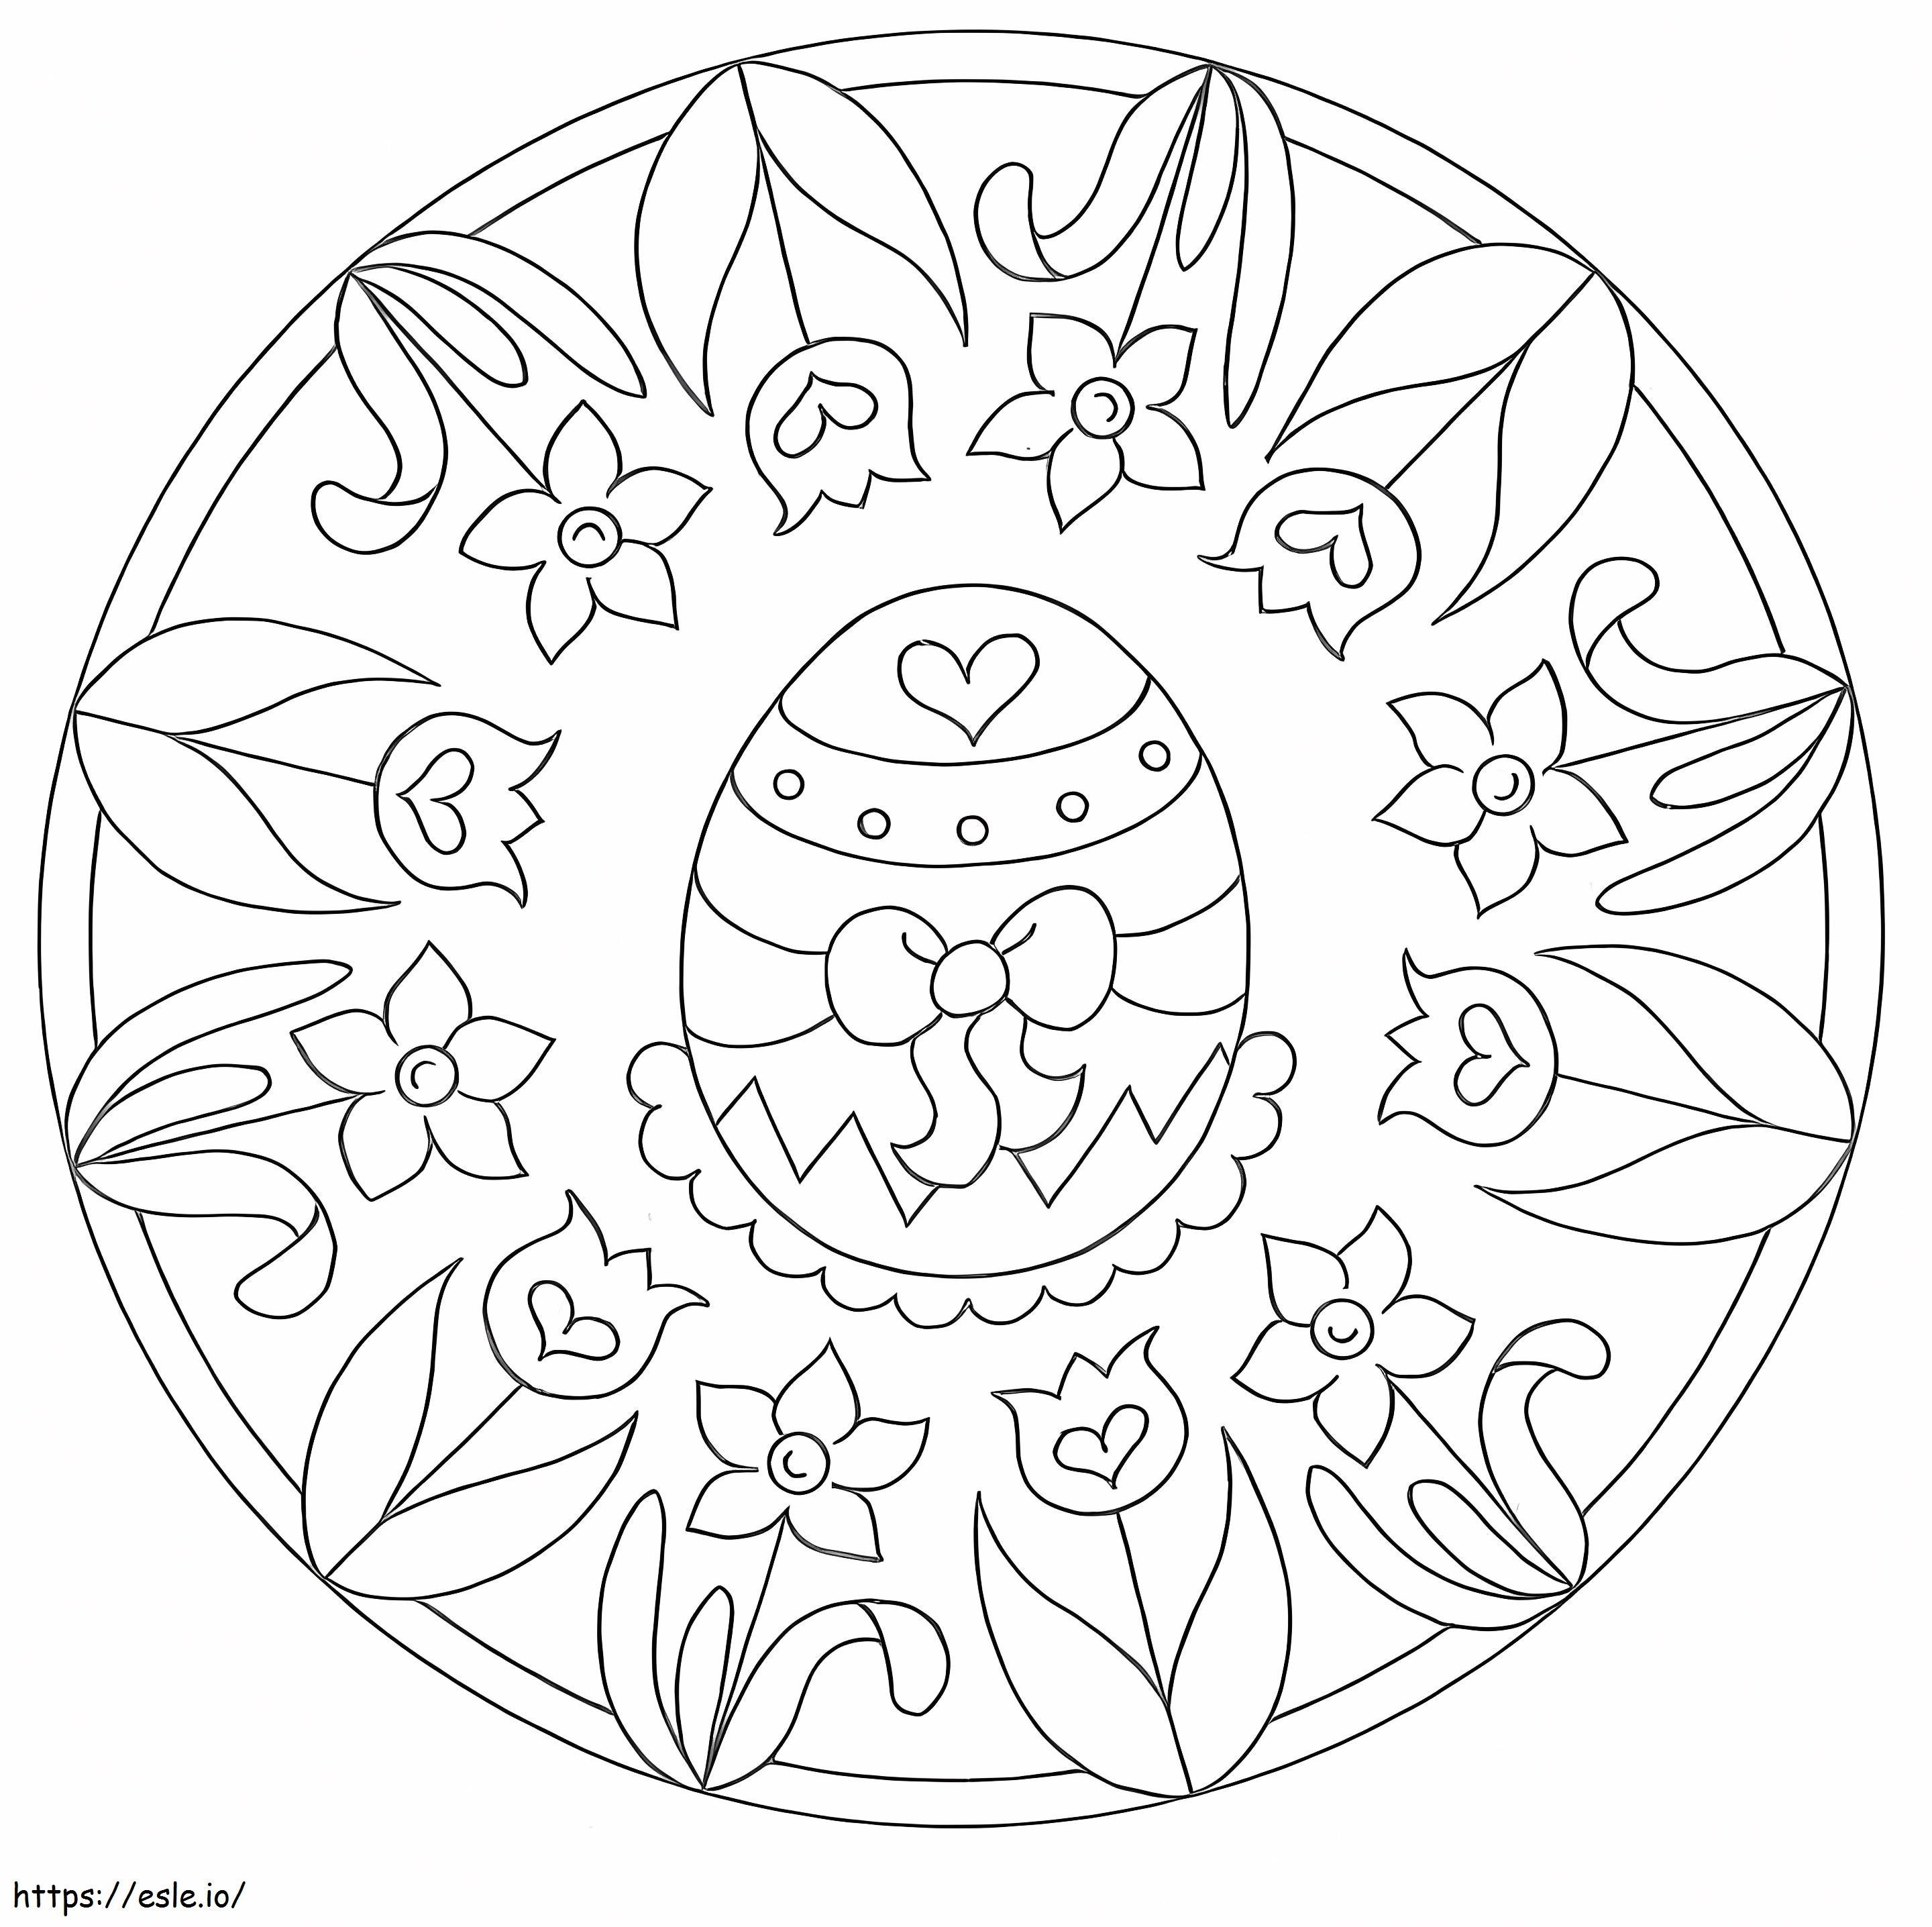 Easter Egg Mandala coloring page